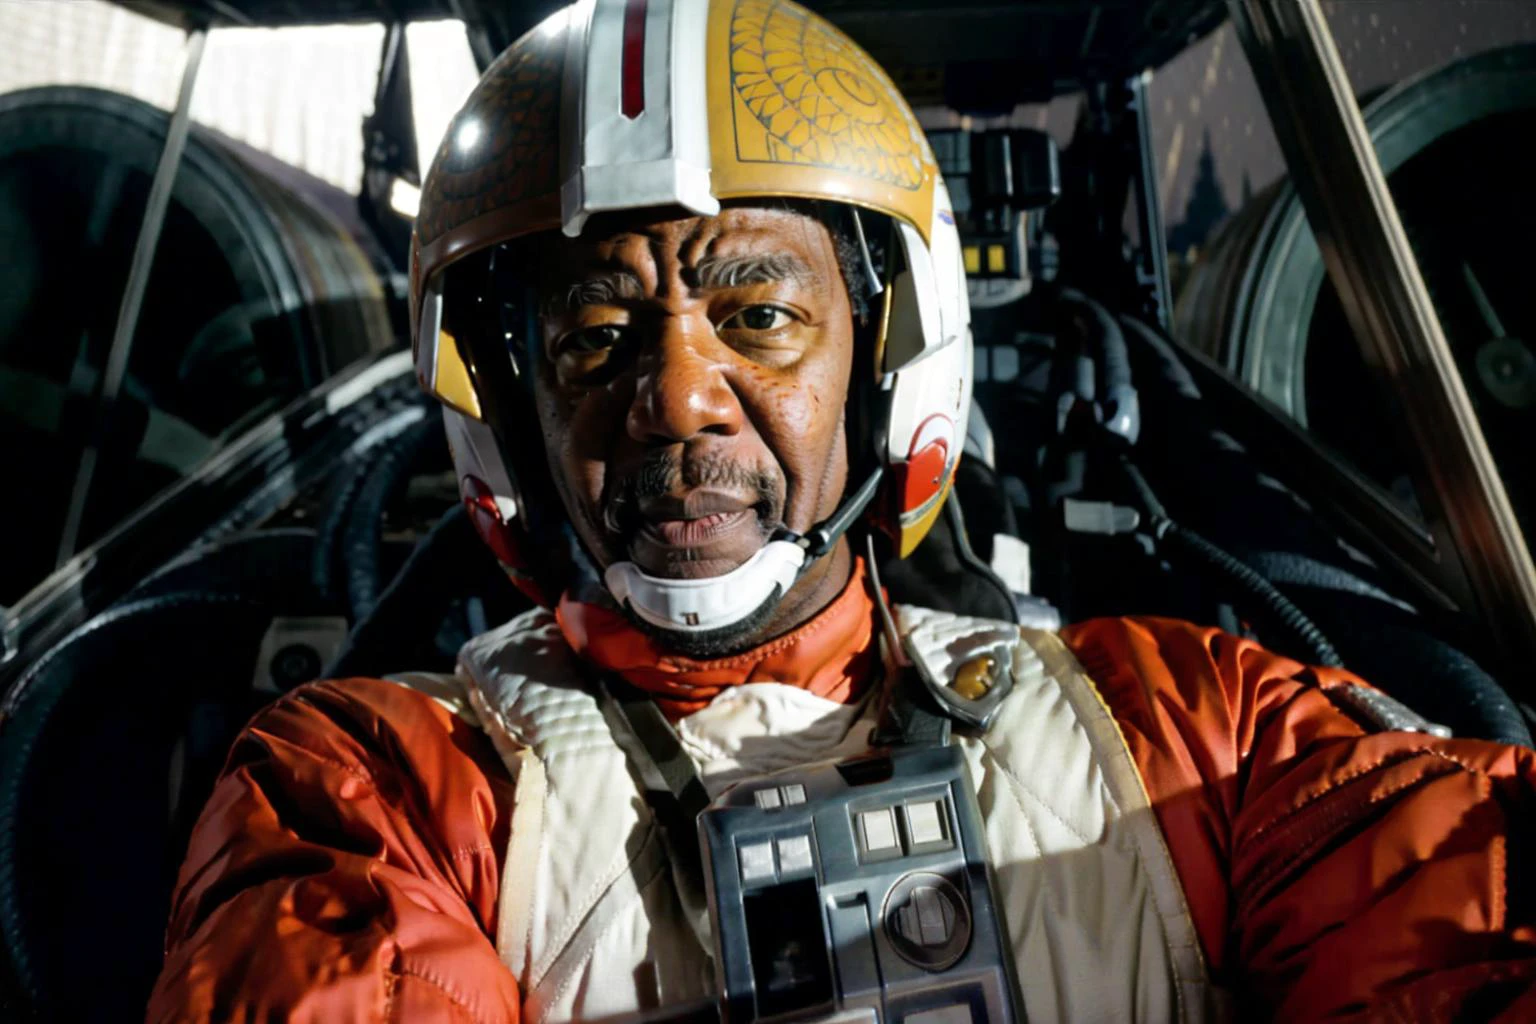 cockpit view,,morgan freeman in rebel pilot suit,helmet,googles,concentrating